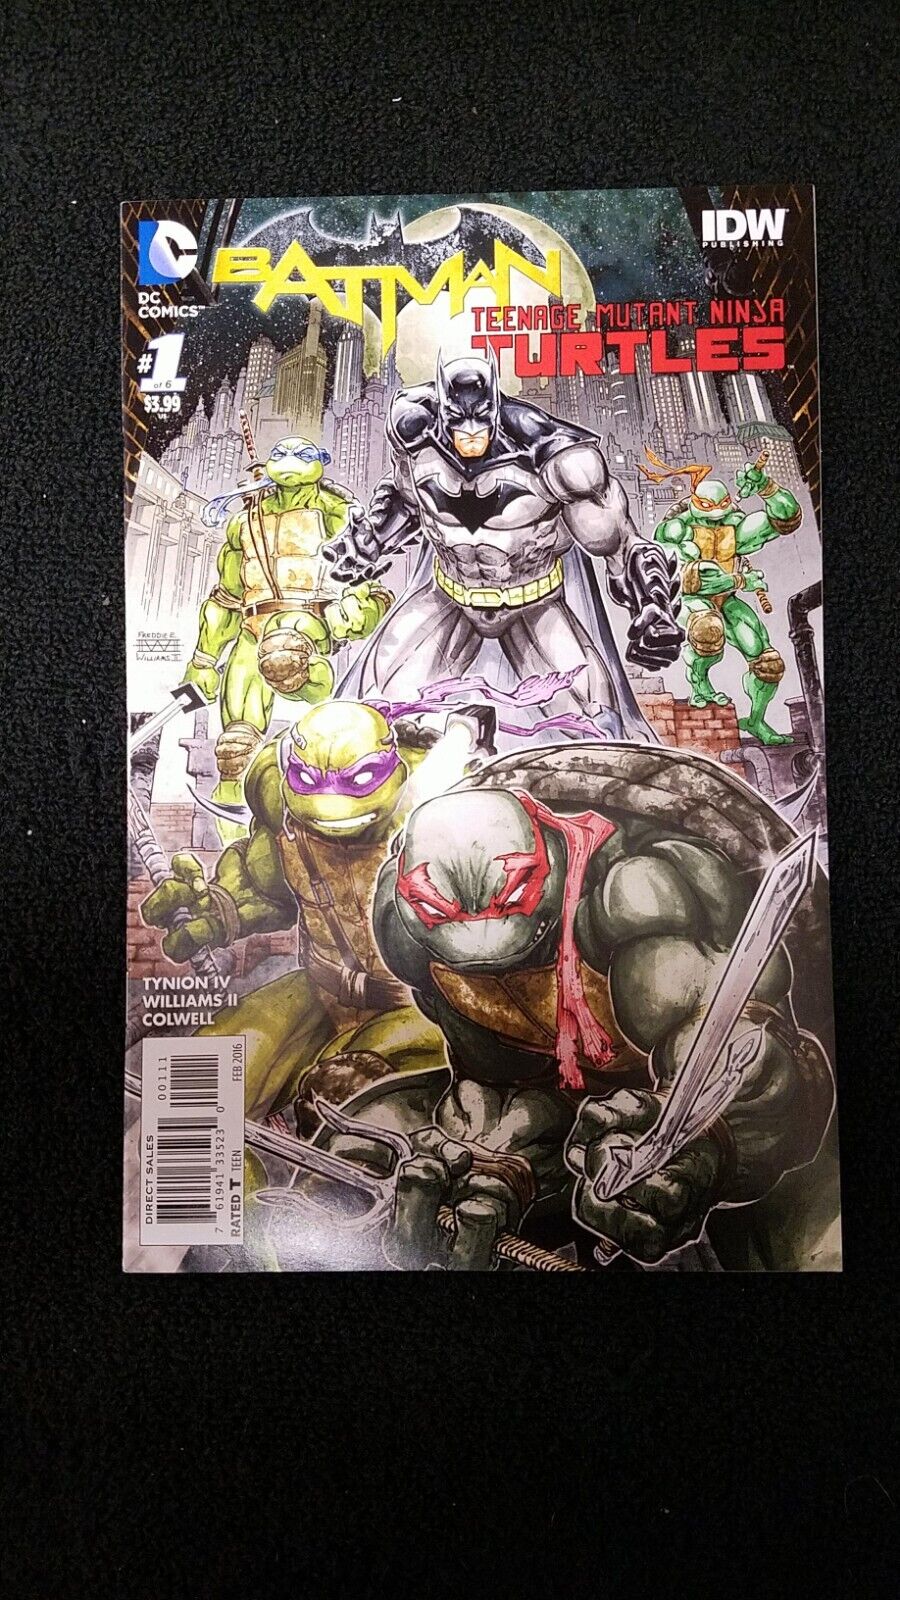 2016 IDW/DC COMICS BATMAN/TEENAGE MUTANT NINJA TURTLES #1 VF/NM TYNION IV